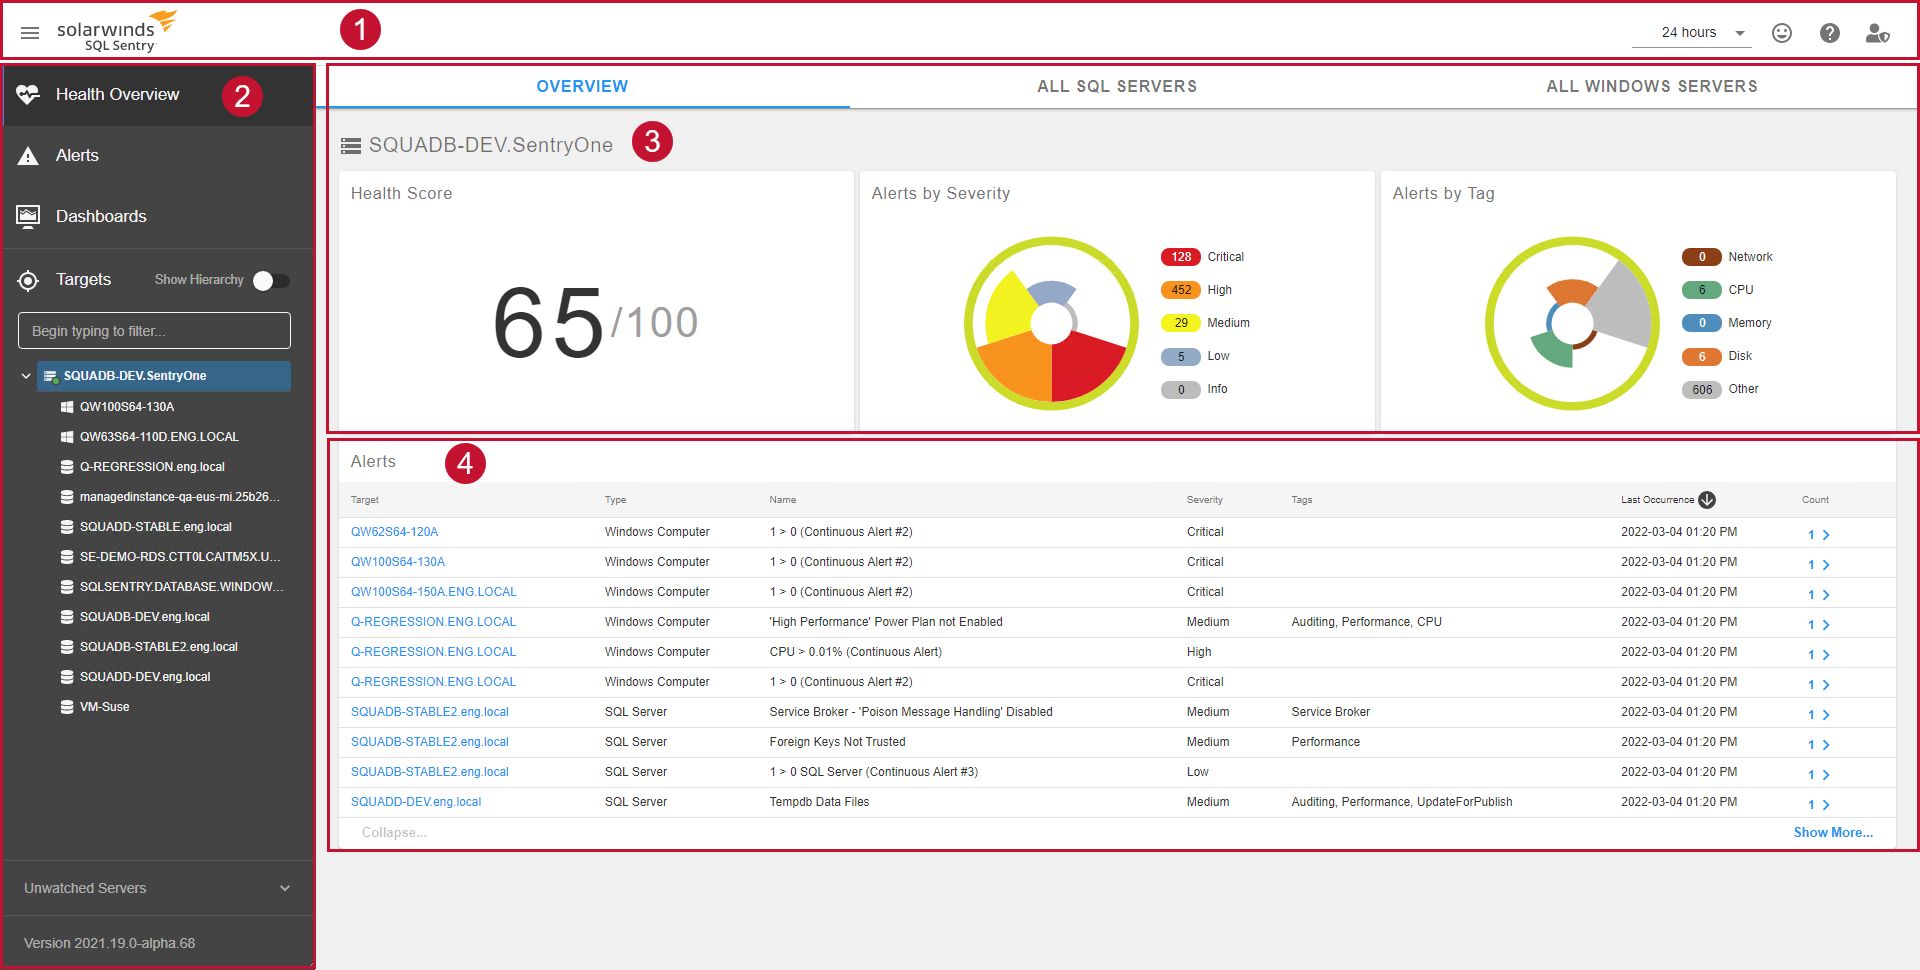 SQL Sentry Portal Home view highlighting: 1. Navigation bar, 2. Sidebar, 3. Health Overview, and Alerts.